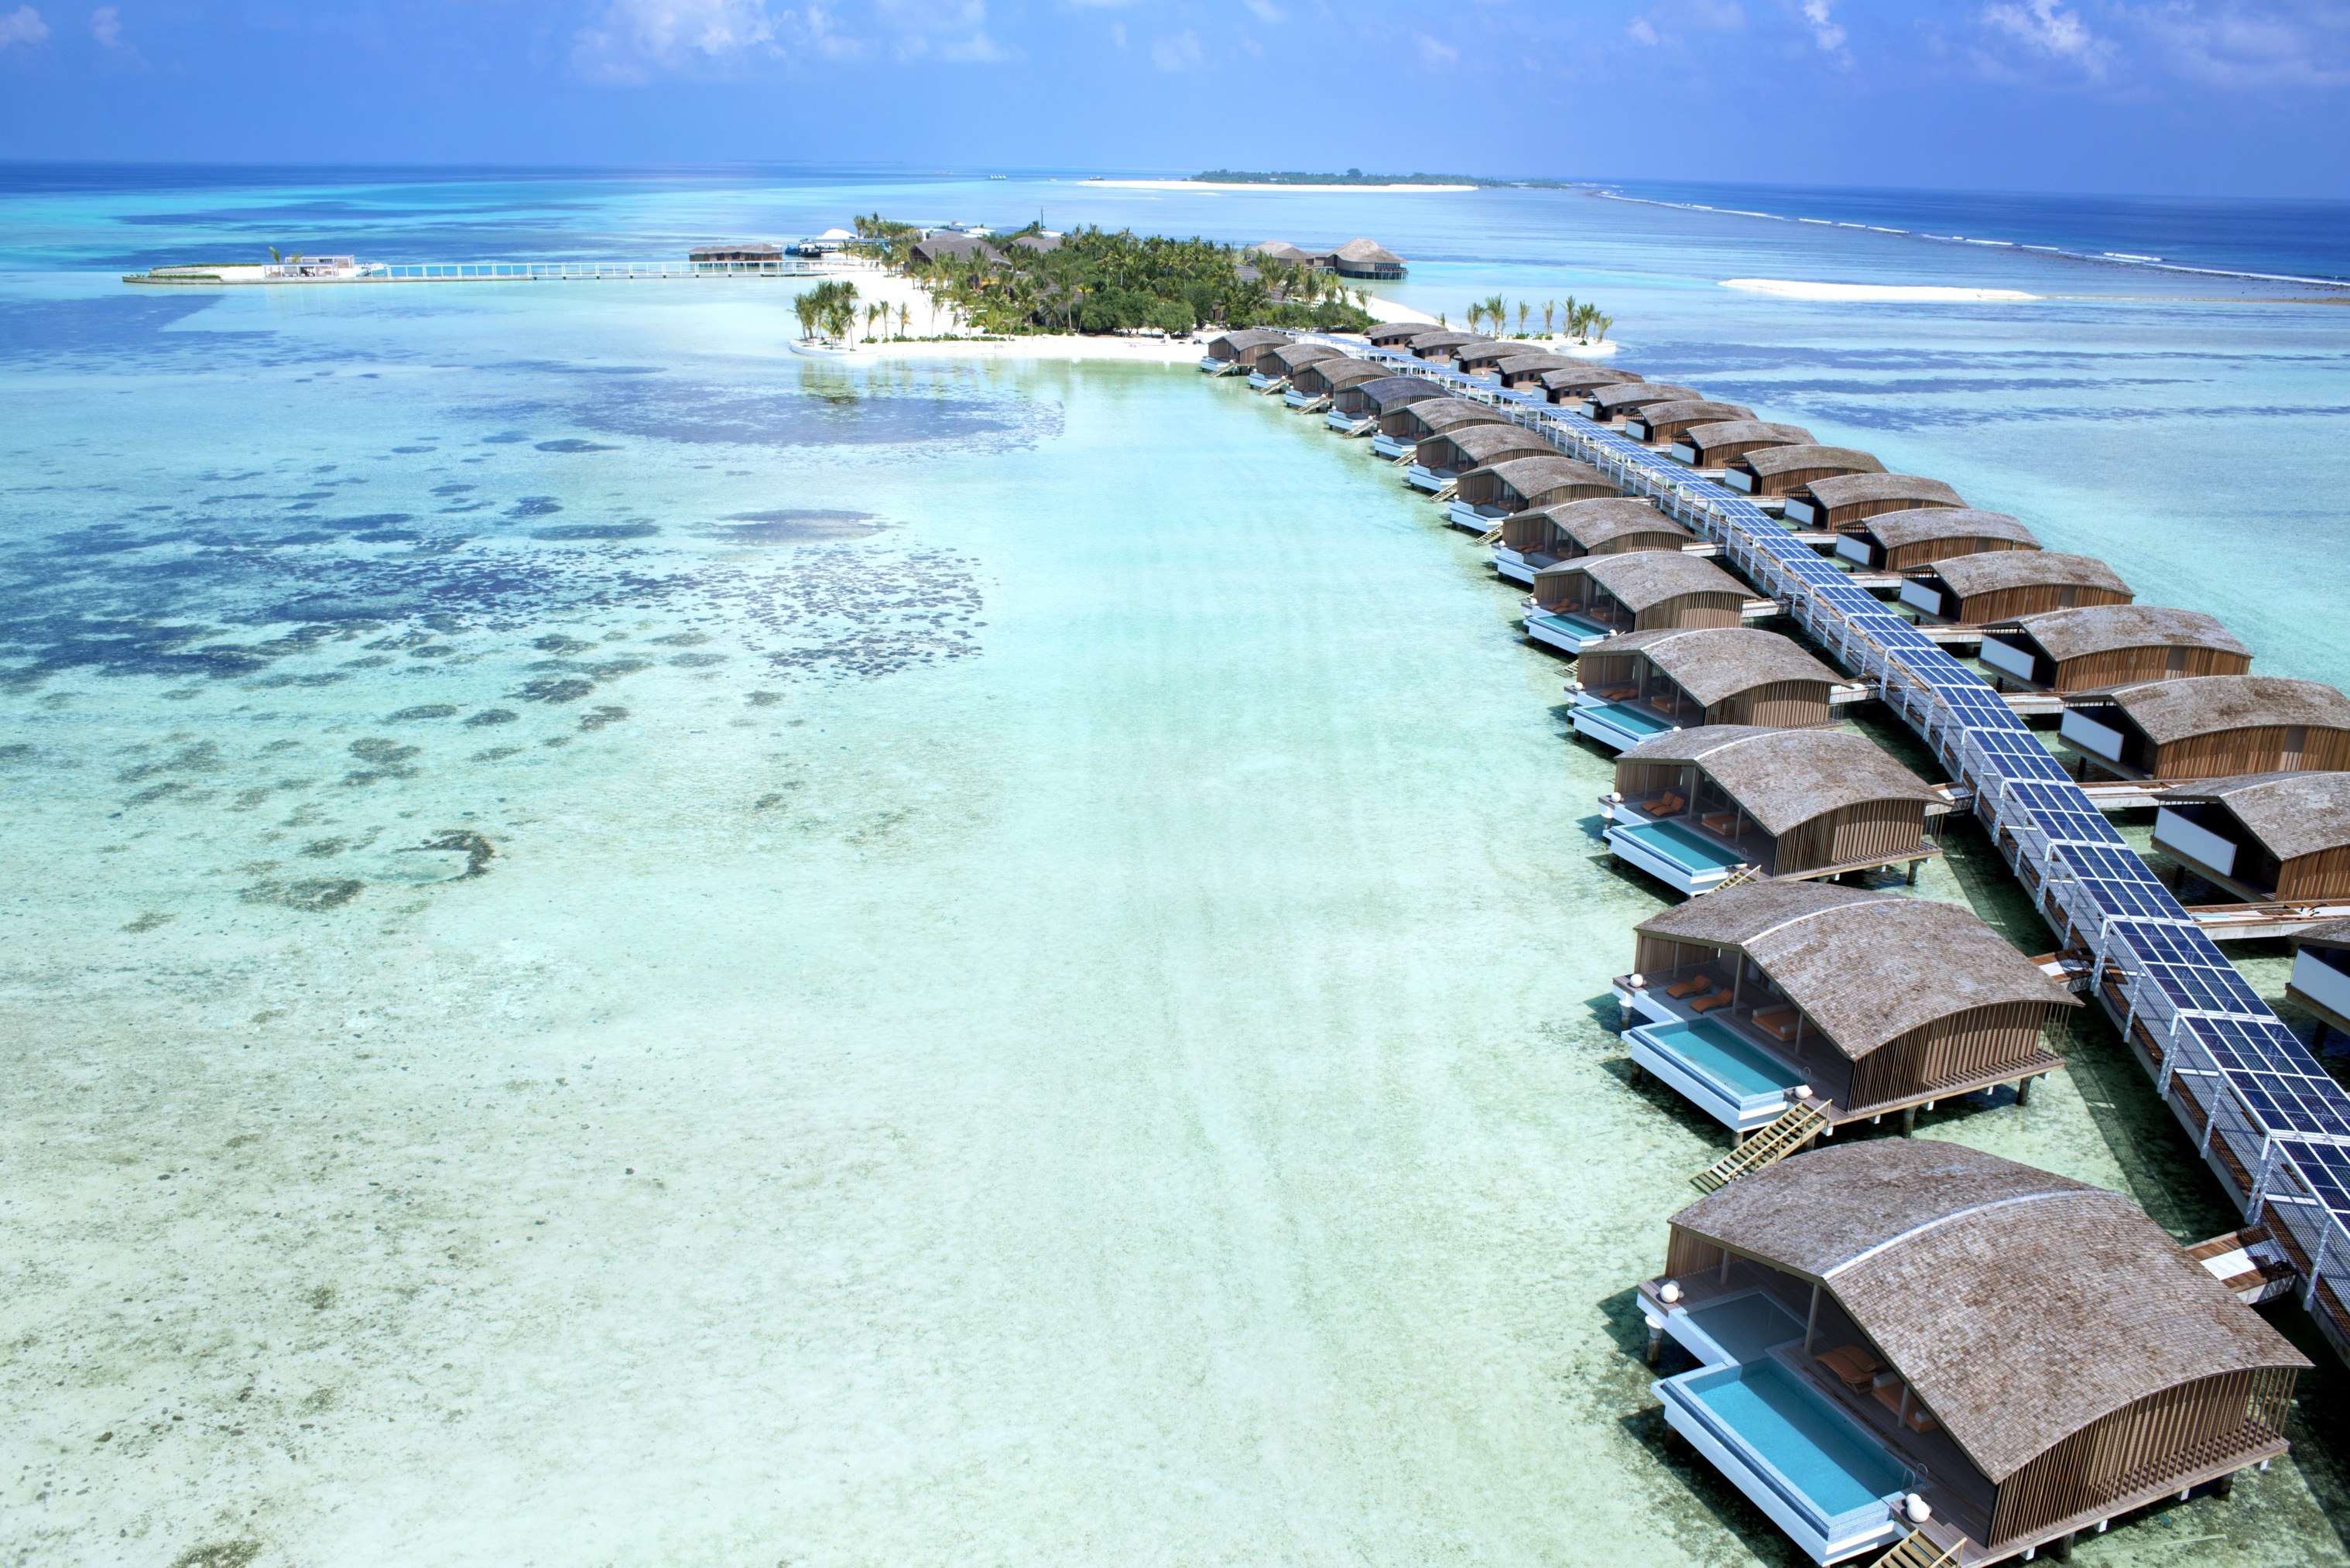 Club Med’s Finolhu Villas in the Maldives. Photo: SCMP Pictures